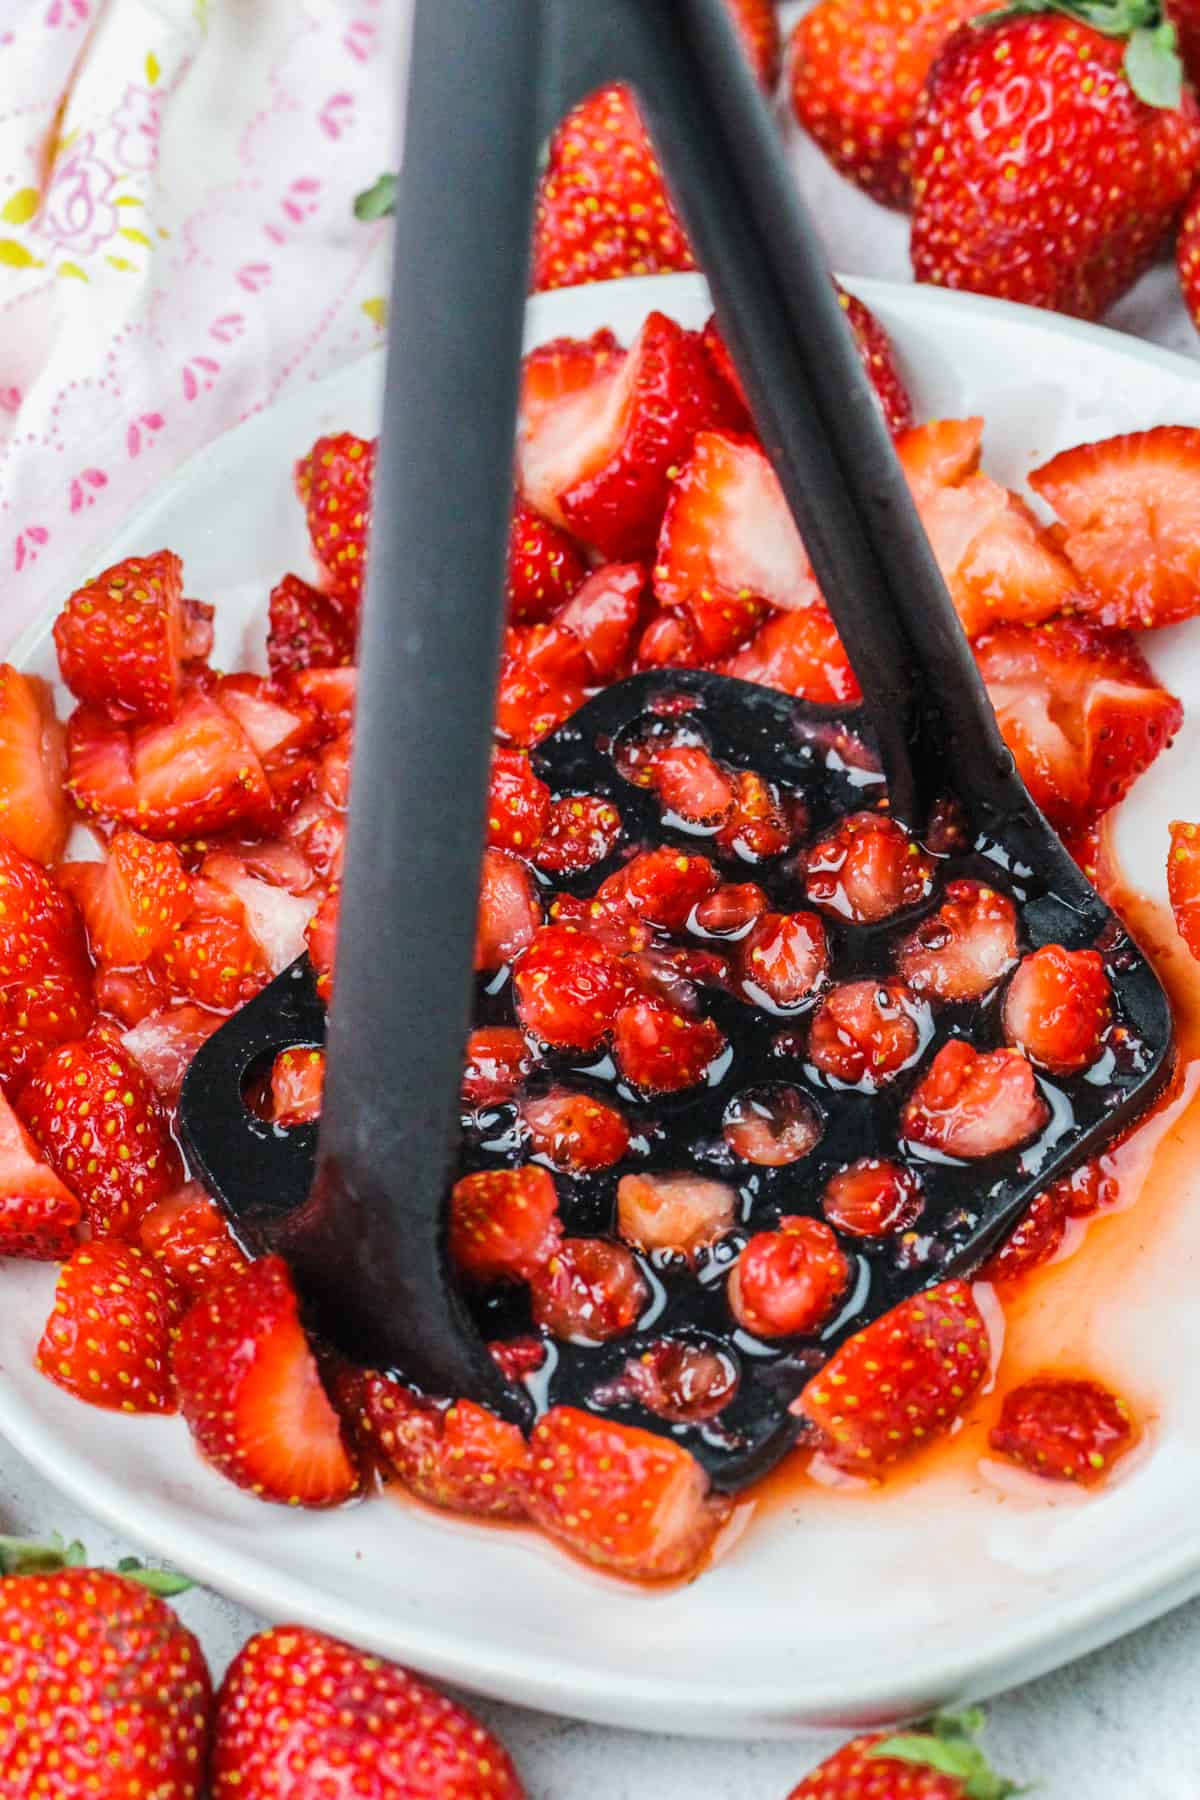 mashed strawberries to make Sugar Free Strawberry Freezer Jam